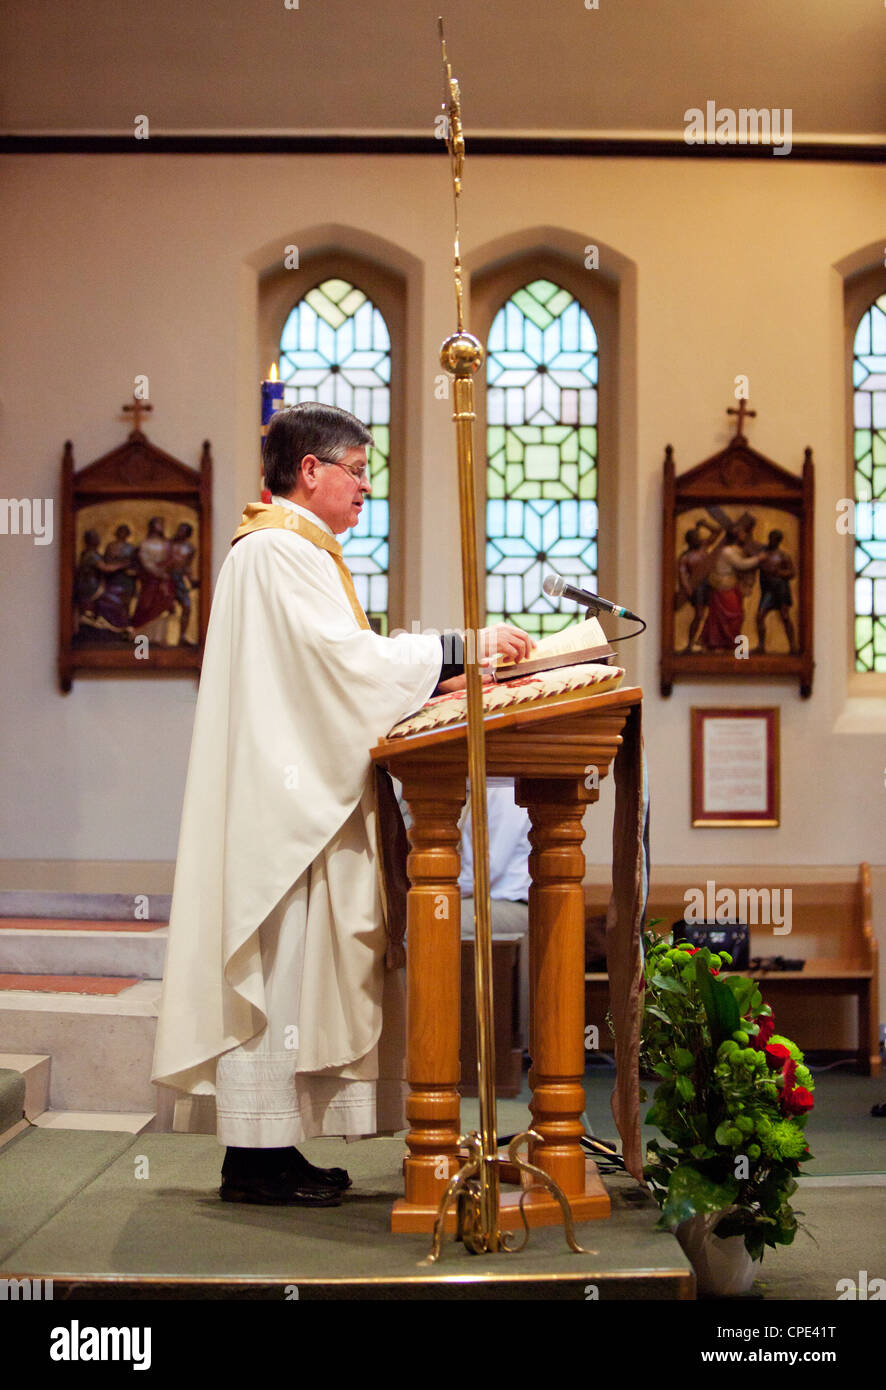 Catholic priest celebrates mass in a church, London, England, UK. Stock Photo